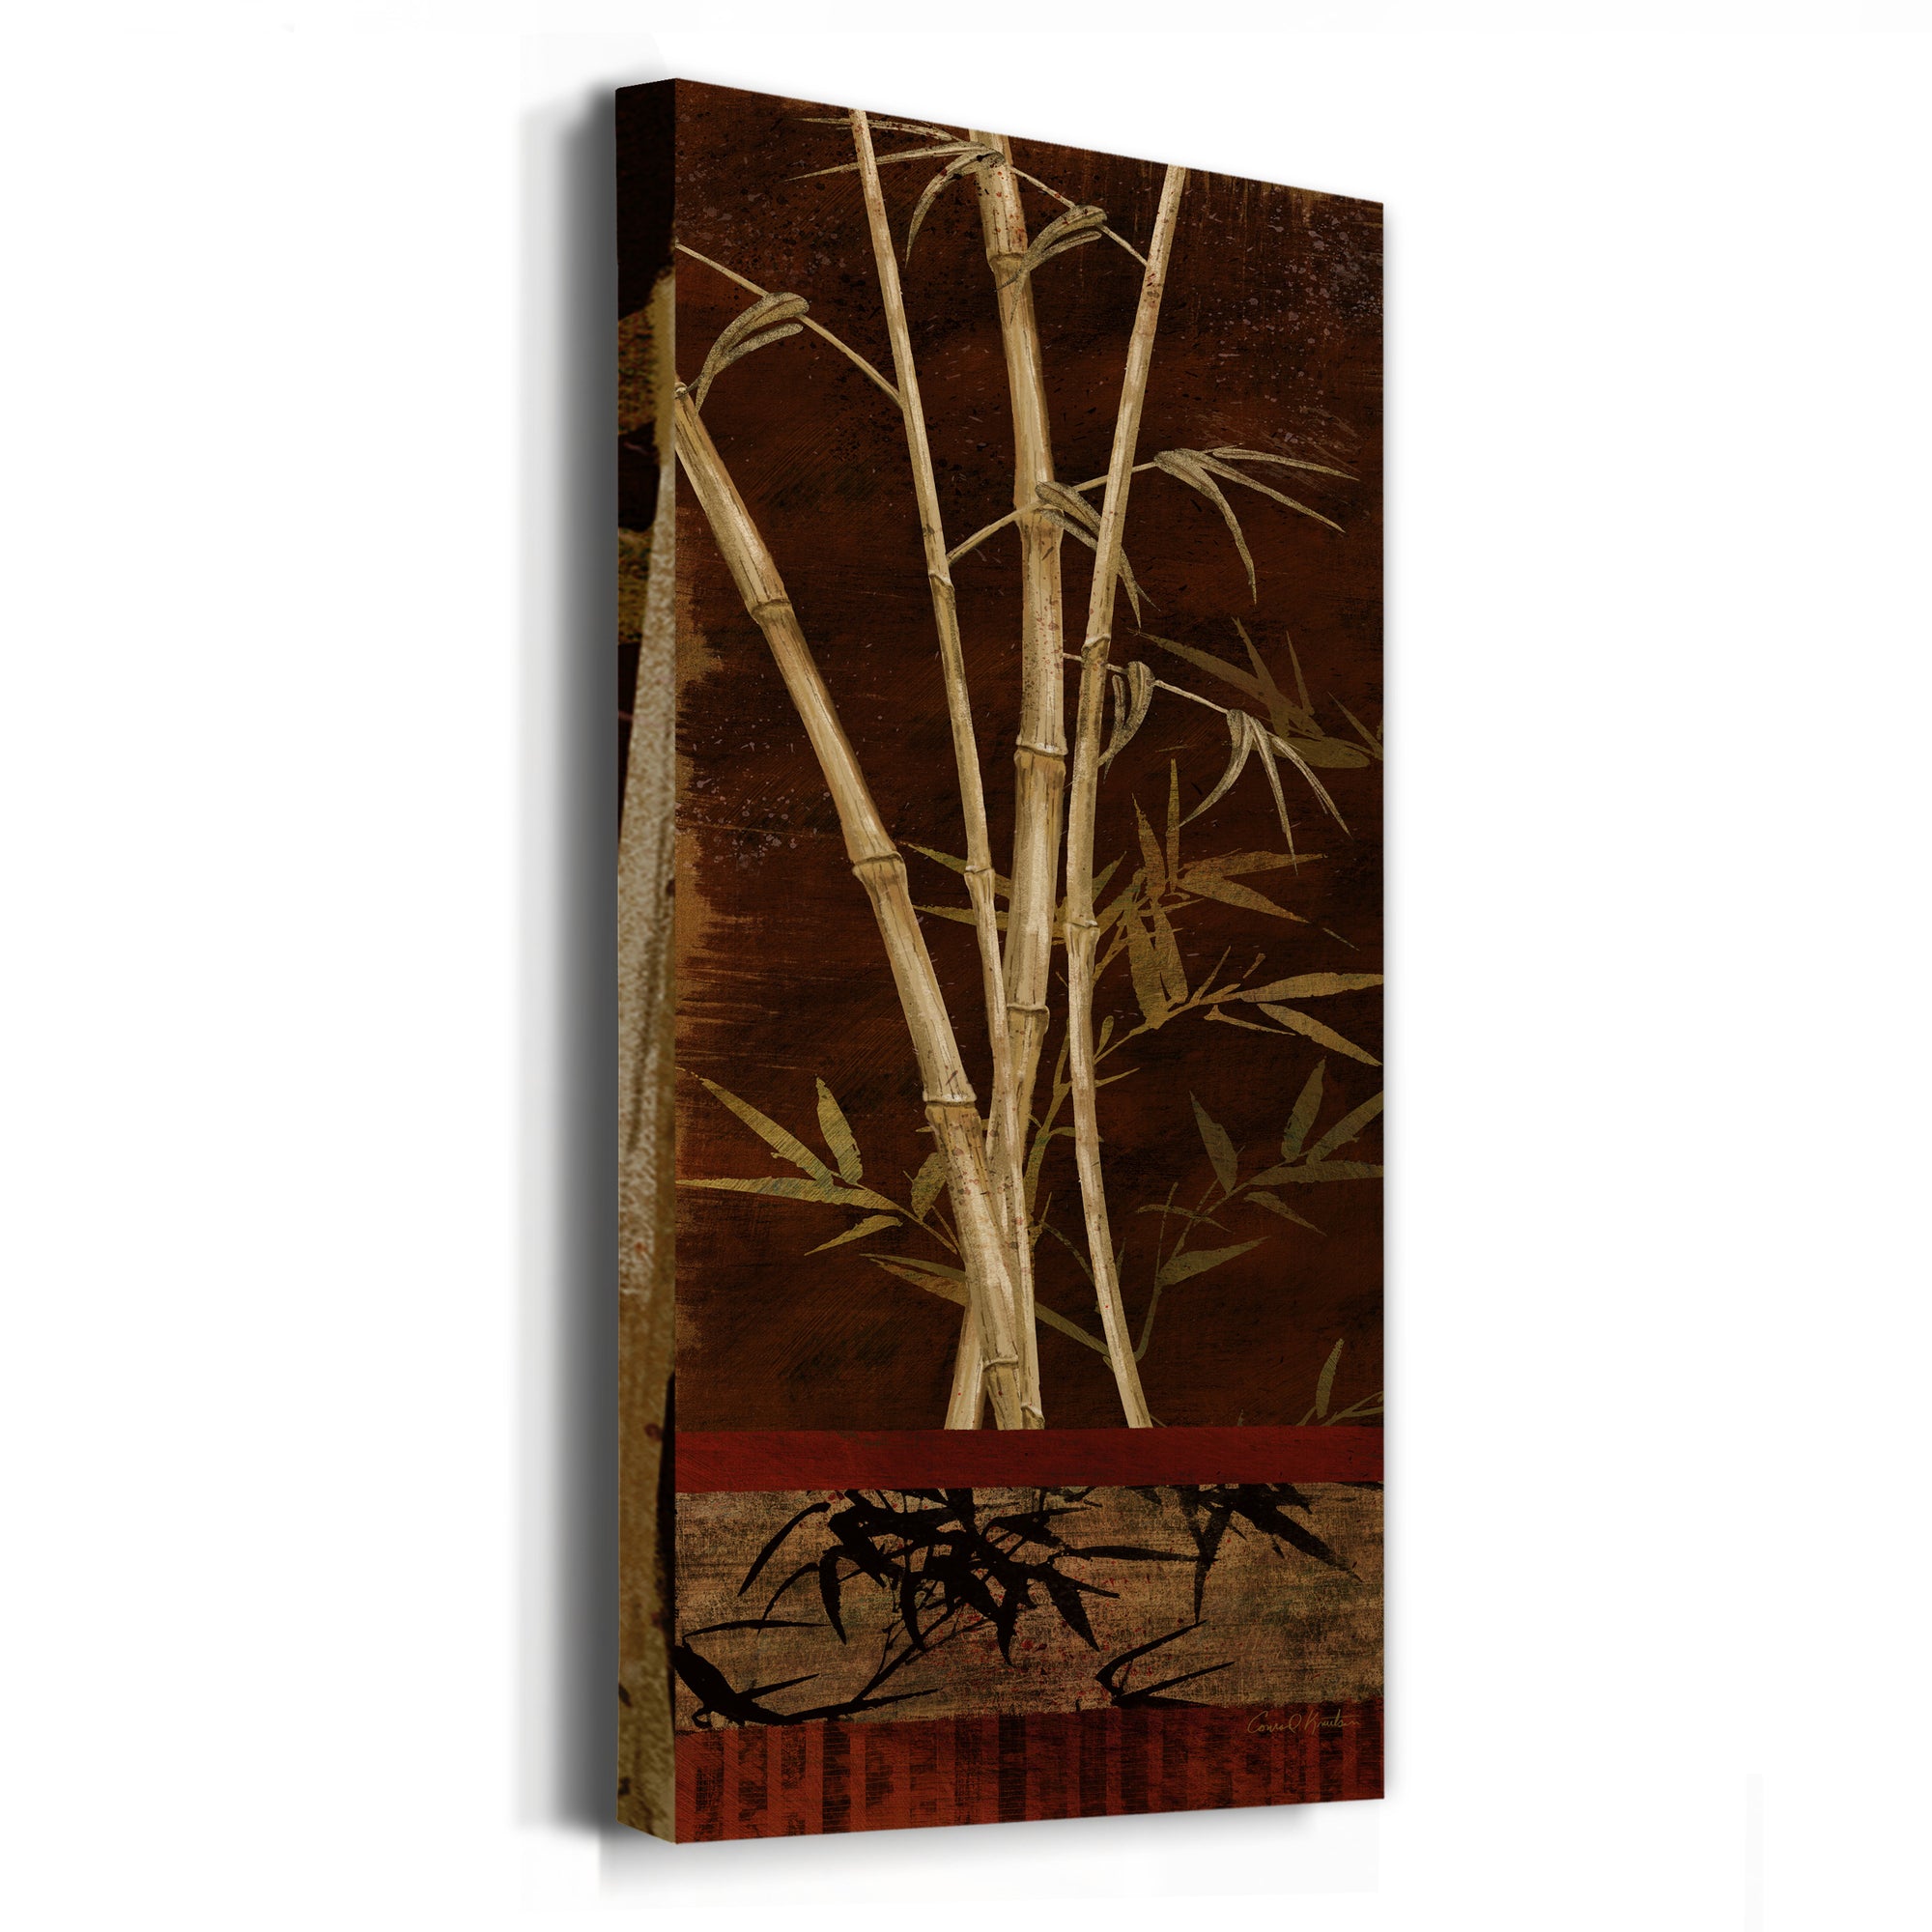 Bamboo Garden II - Premium Gallery Wrapped Canvas - Ready to Hang